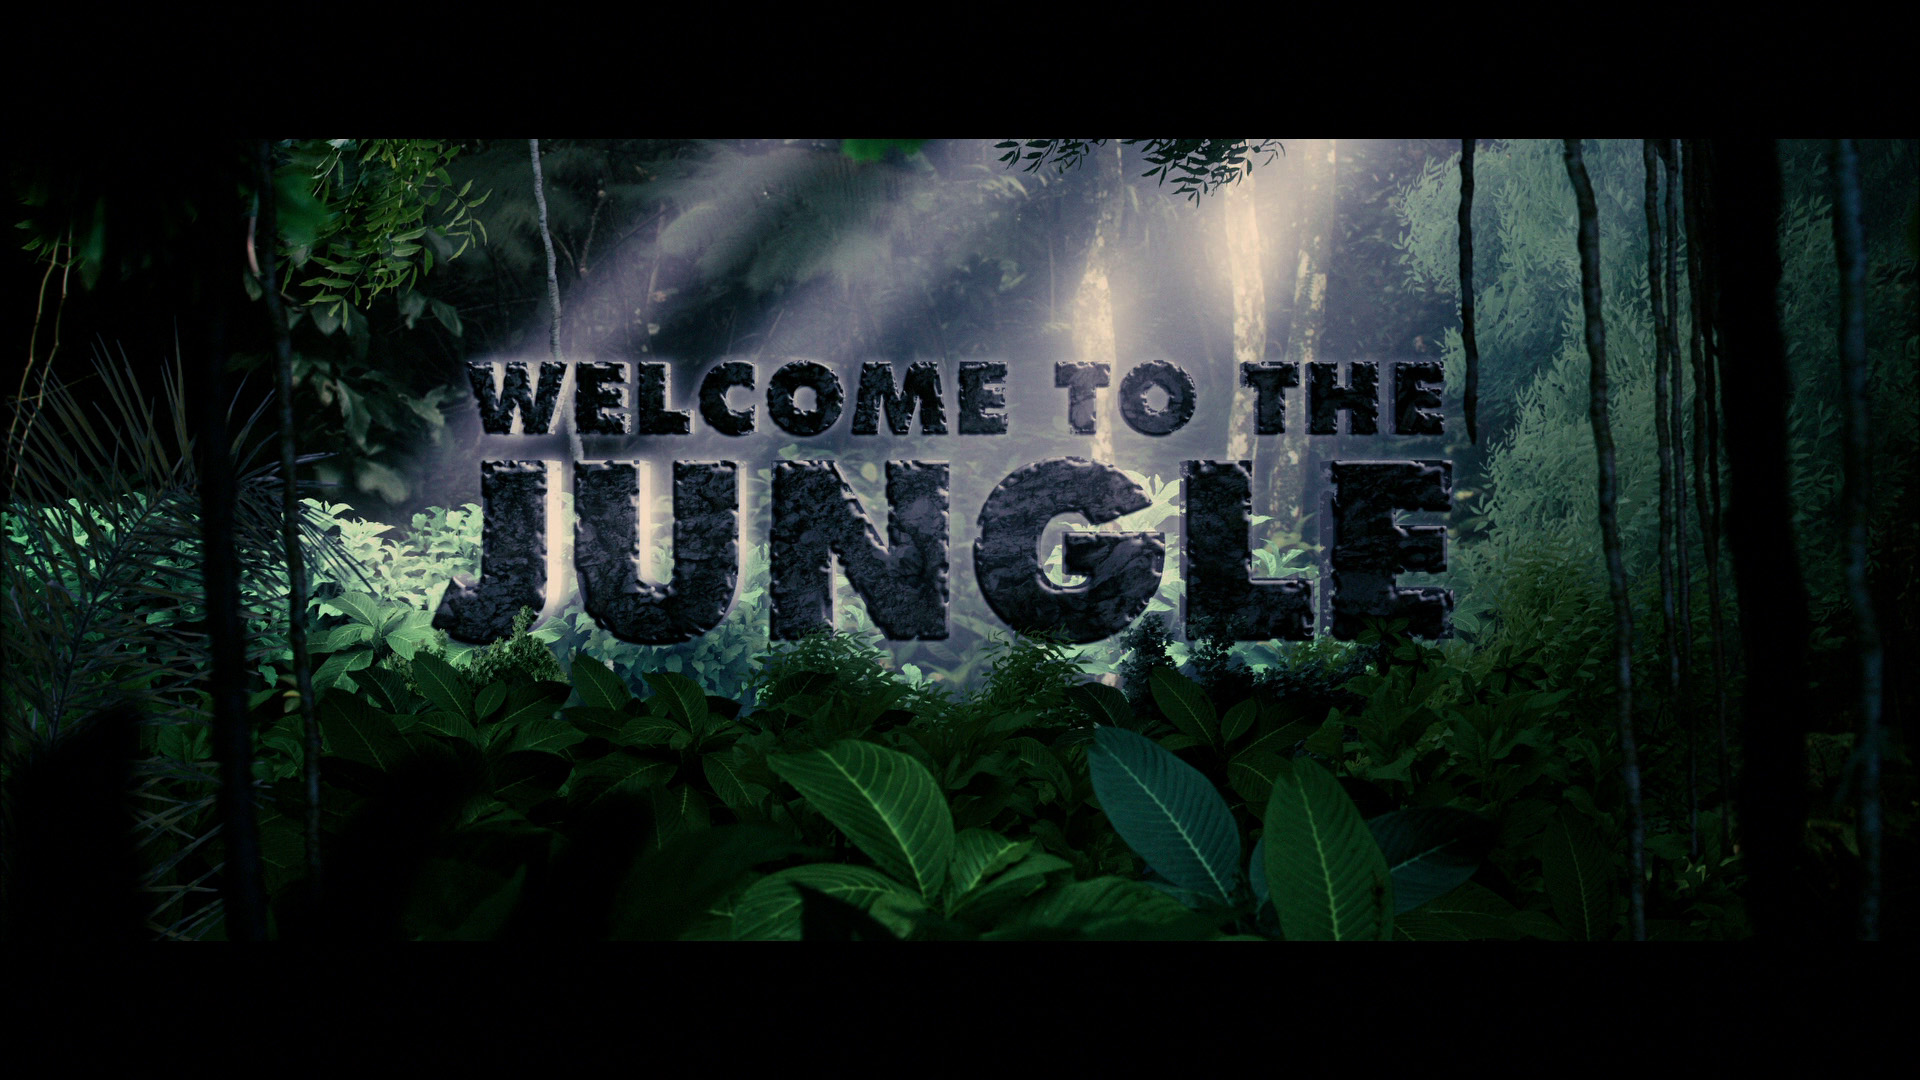 Ин джангл. Надпись джунгли. Welcome to the джунгли. Добро пожаловать в джунгли надпись. Велком ту Джангл.